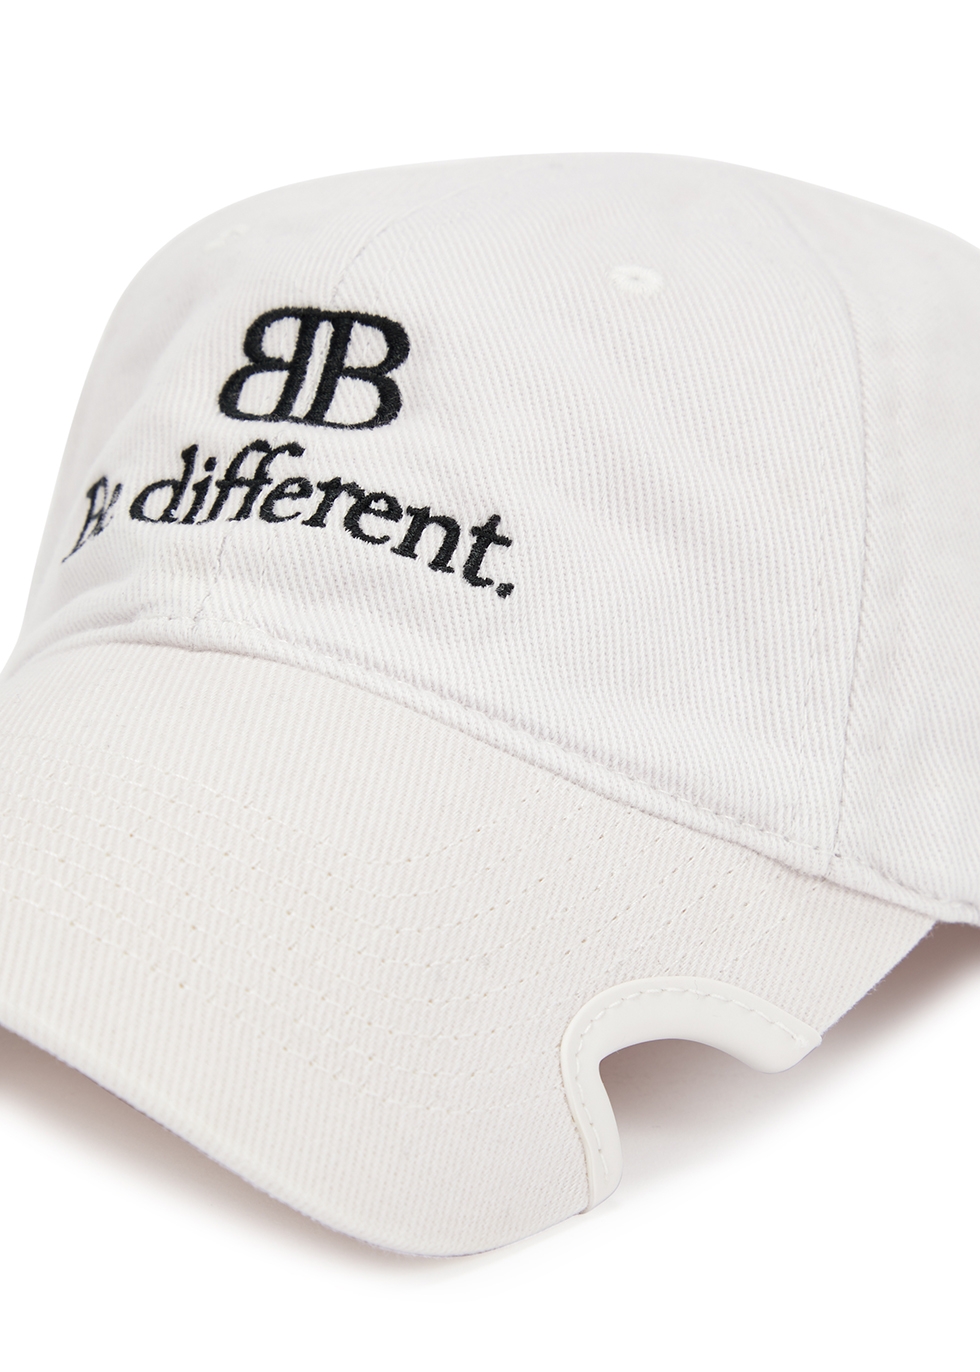 BALENCIAGA BE DIFFERENT キャップ 帽子 キャップ barrioletras.com